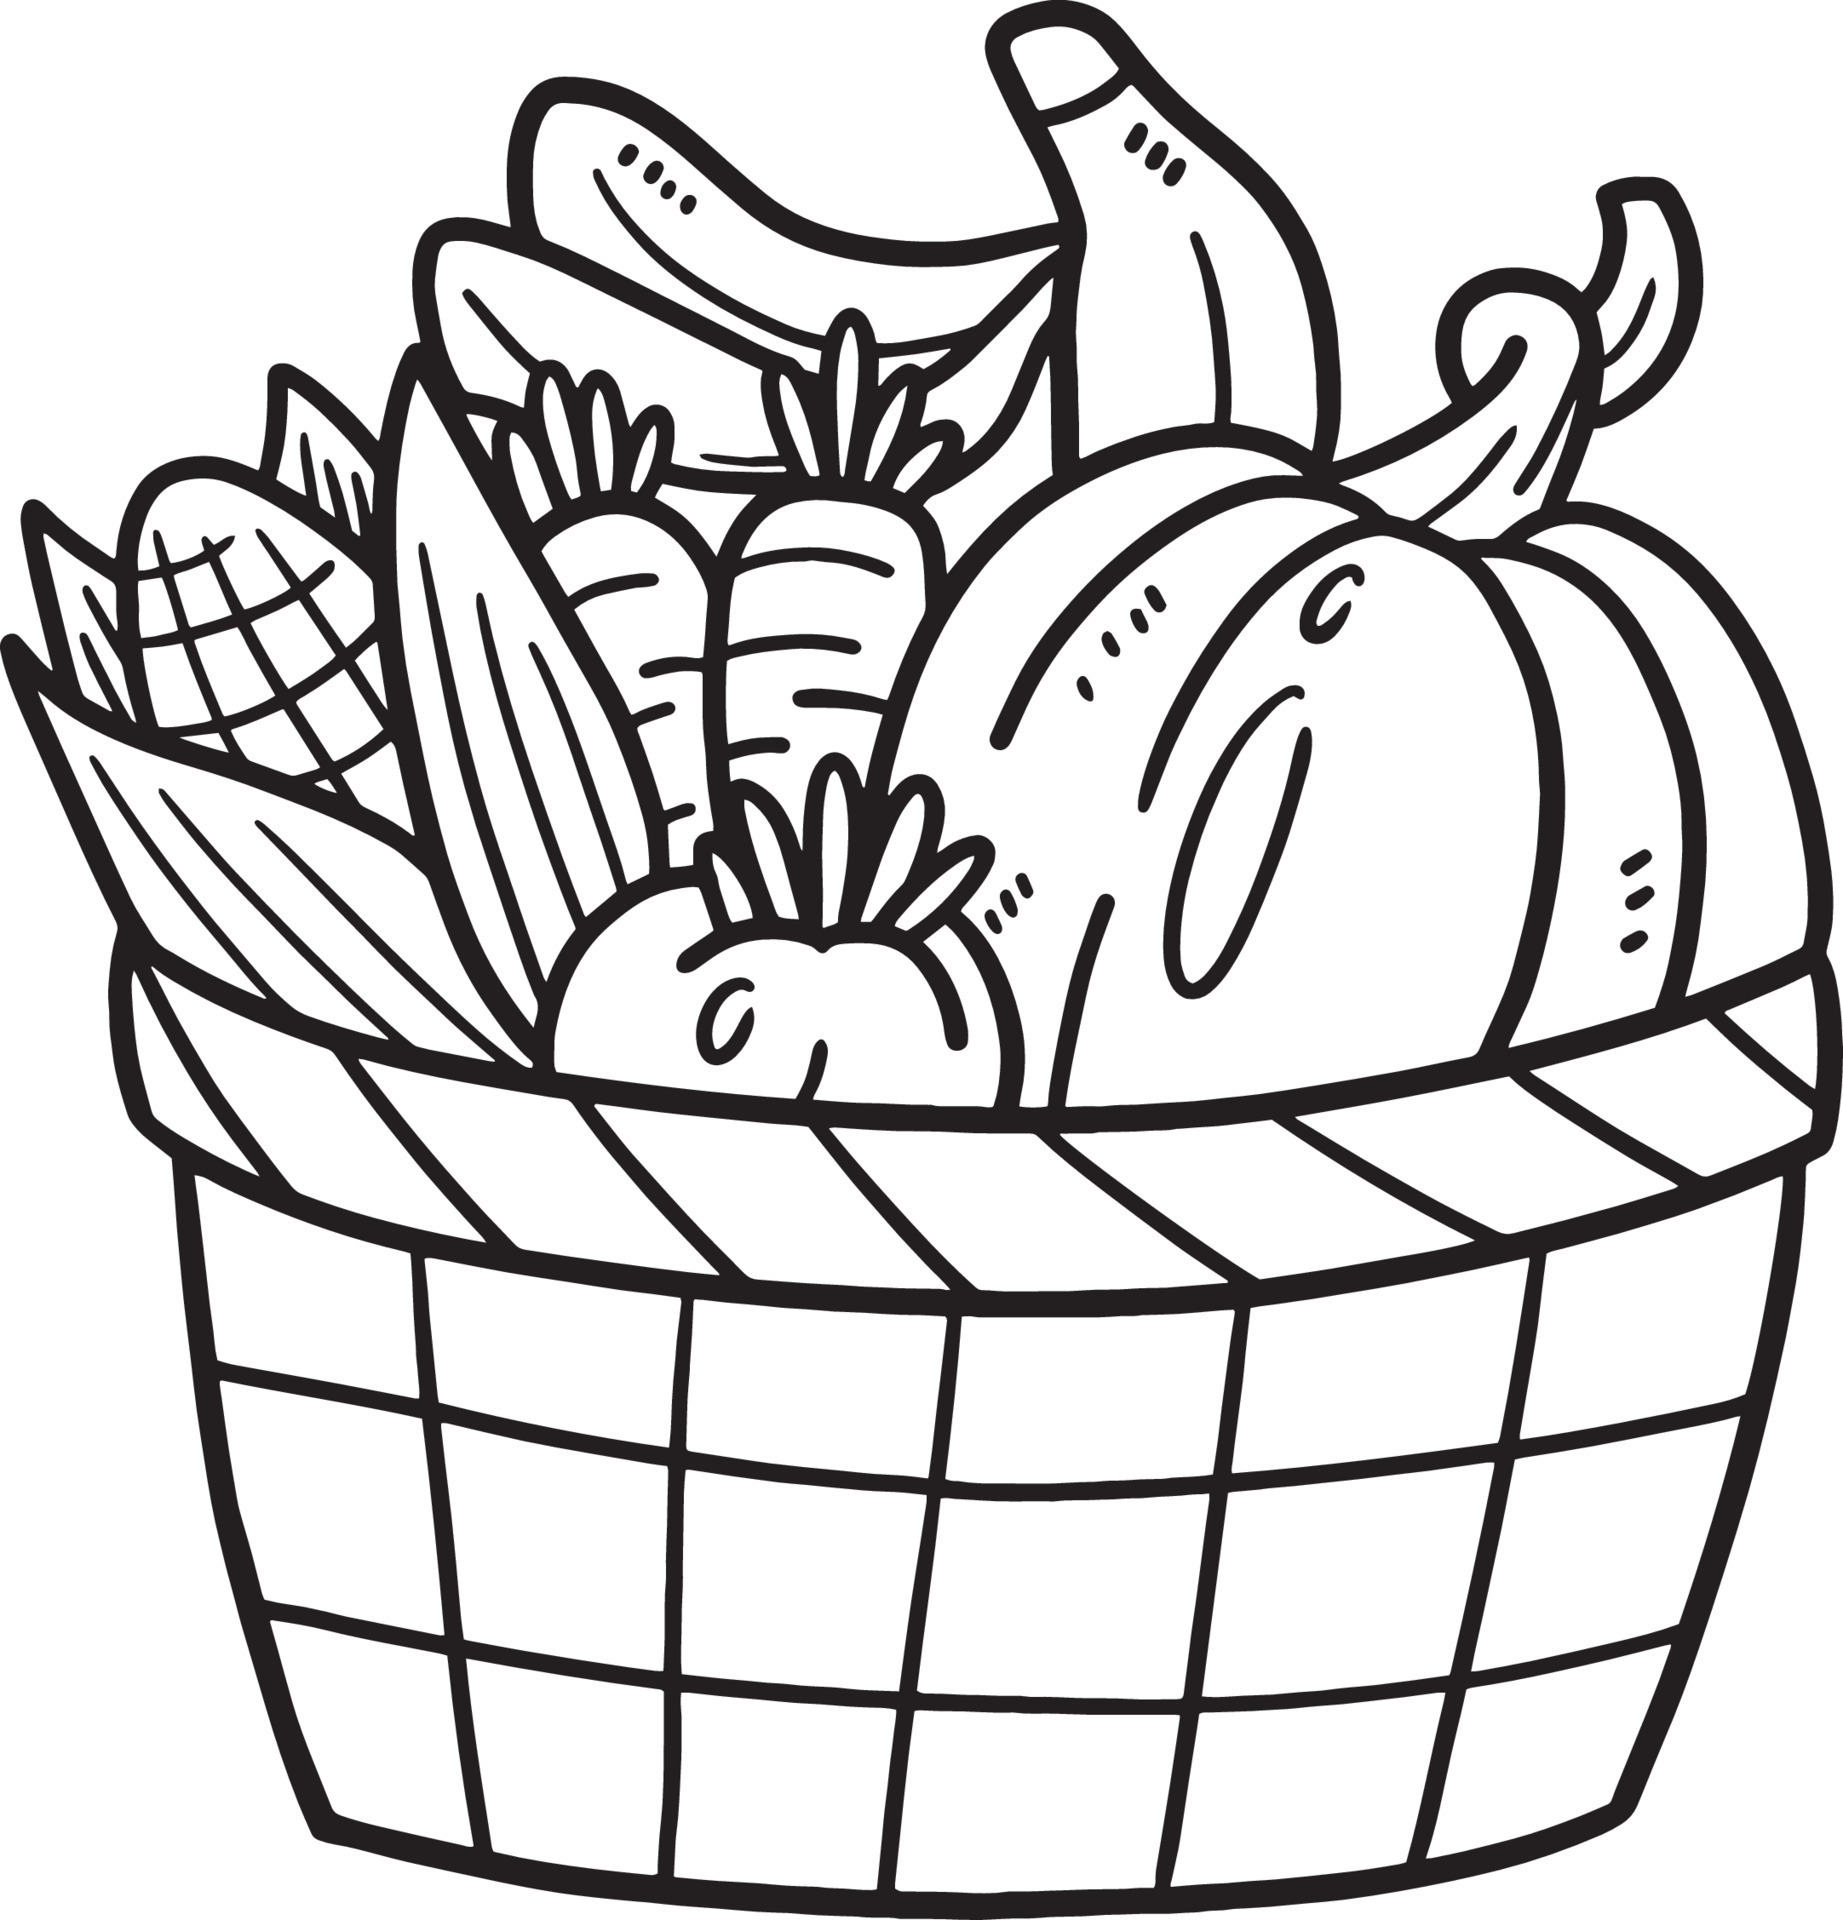 Basket with vegetables and fruit line drawing vintage on Craiyon-saigonsouth.com.vn